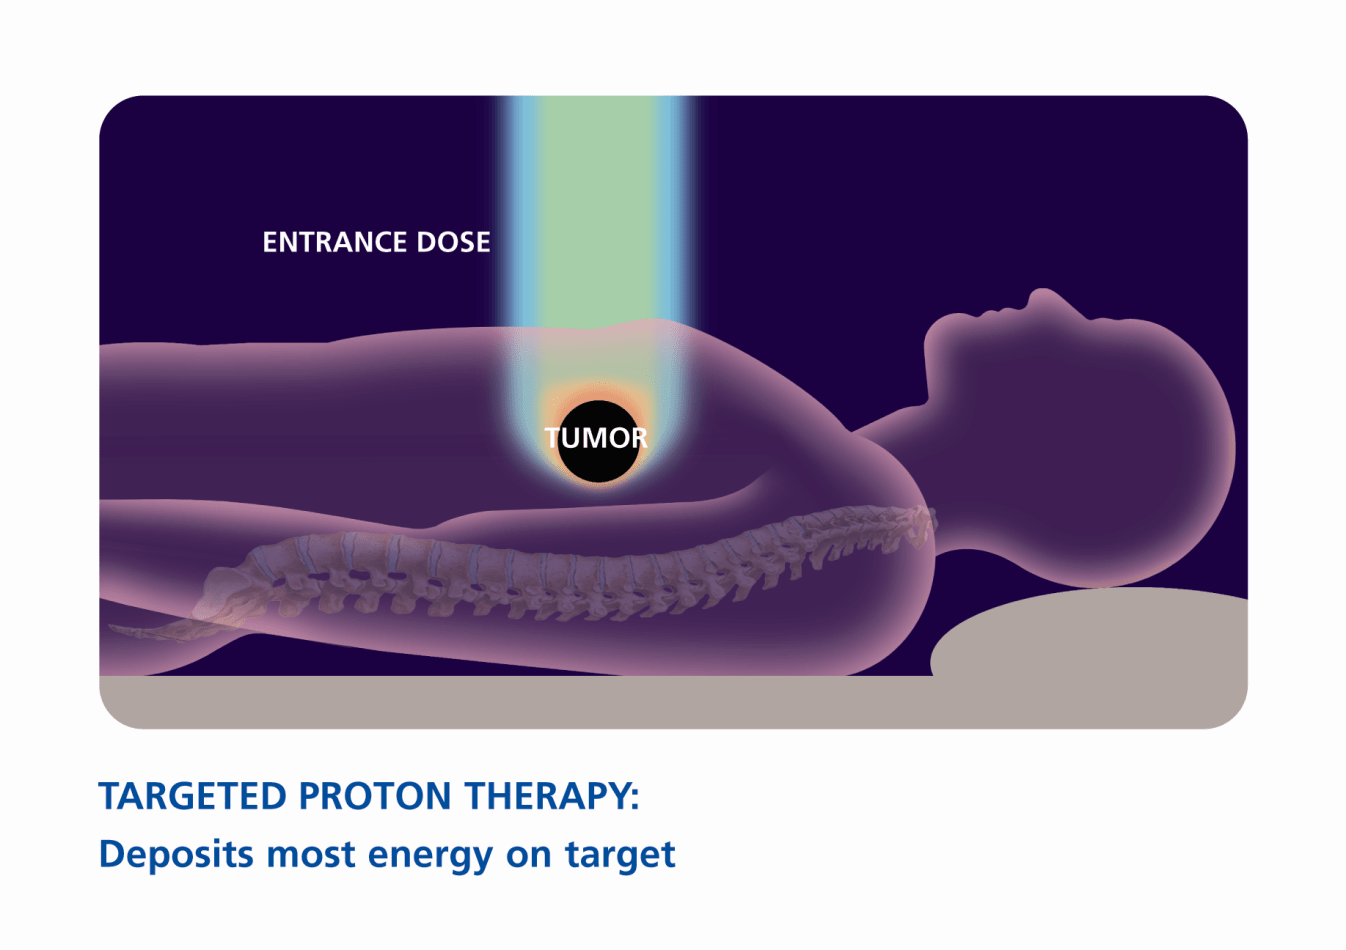 Proton Therapy Image